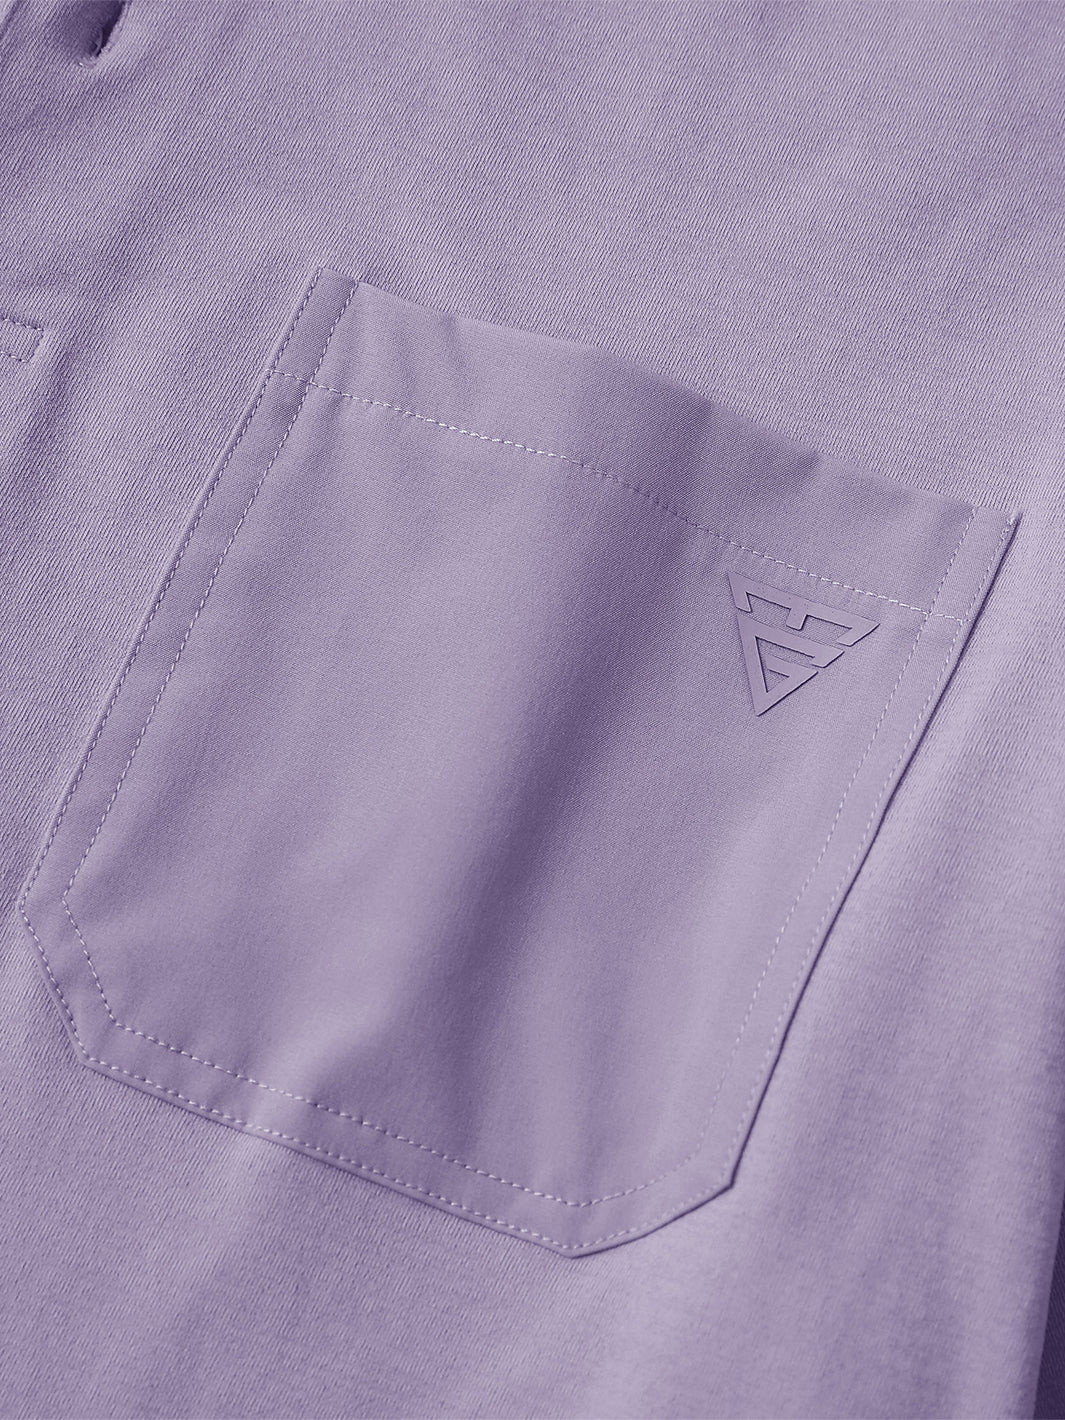 Men's Collarless Pocket Henley Golf Shirts-Lavender